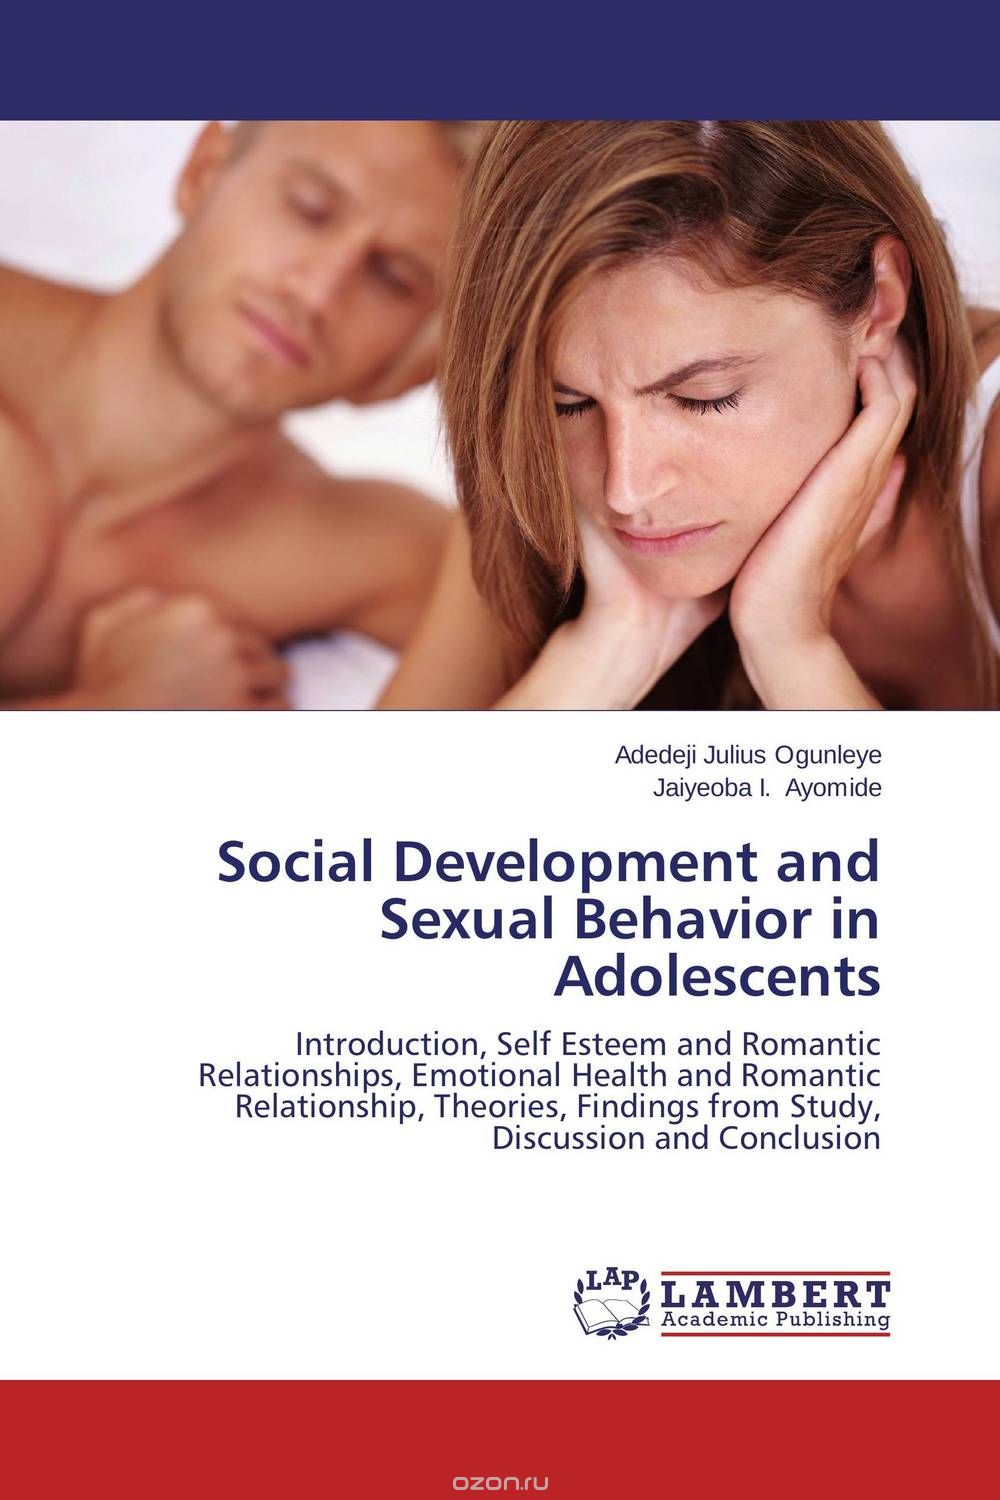 Social Development and Sexual Behavior in Adolescents